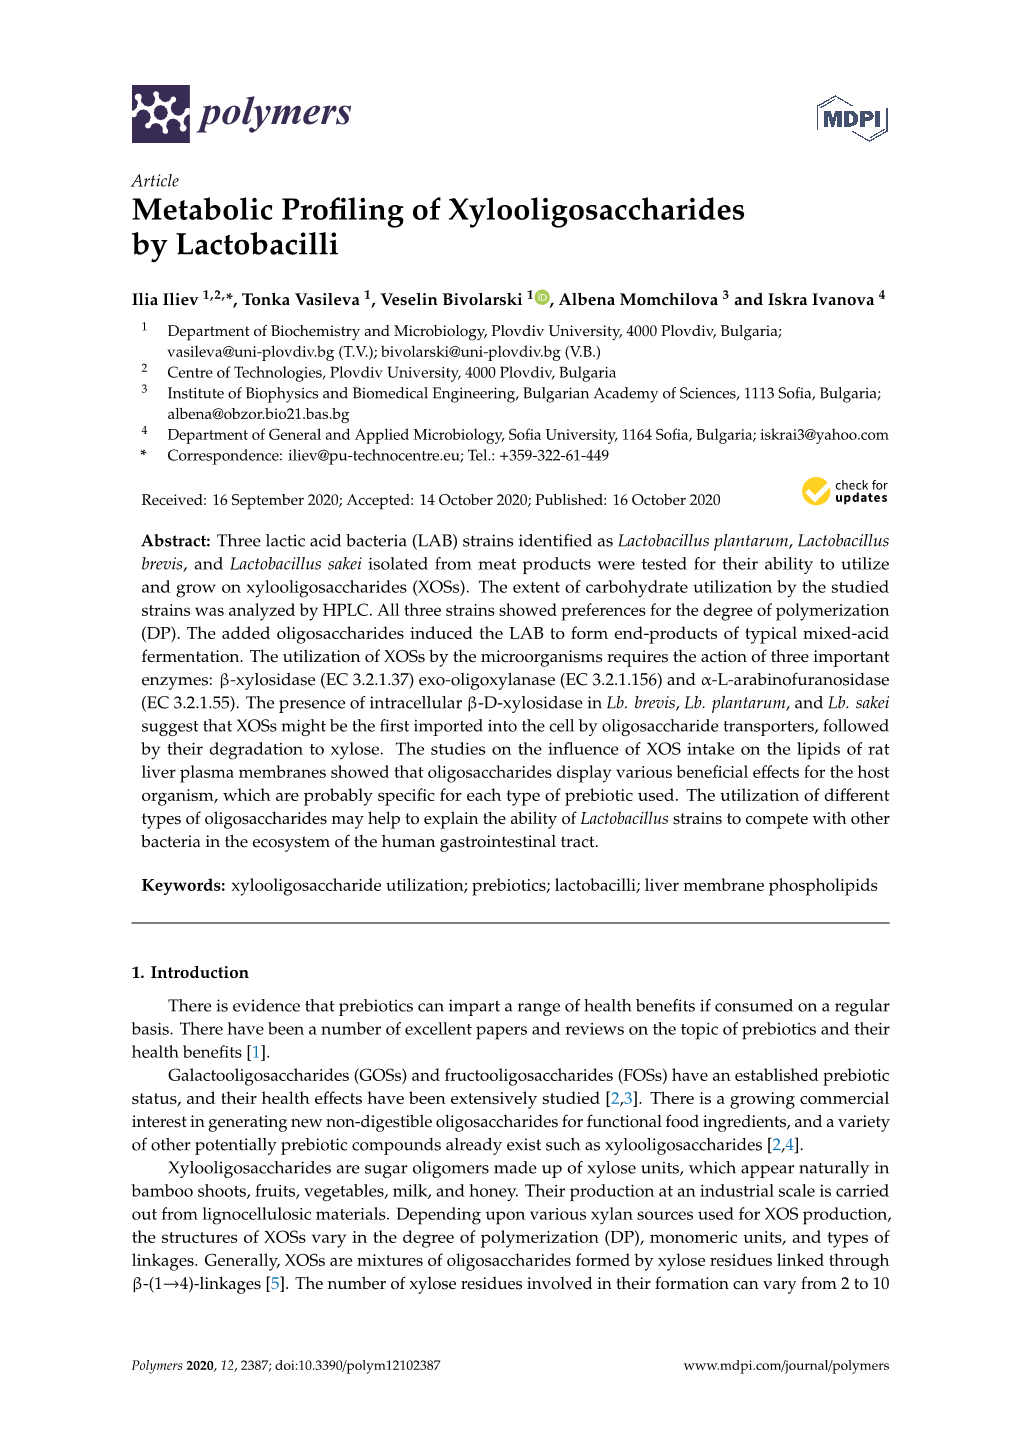 Metabolic Profiling of Xylooligosaccharides by Lactobacilli